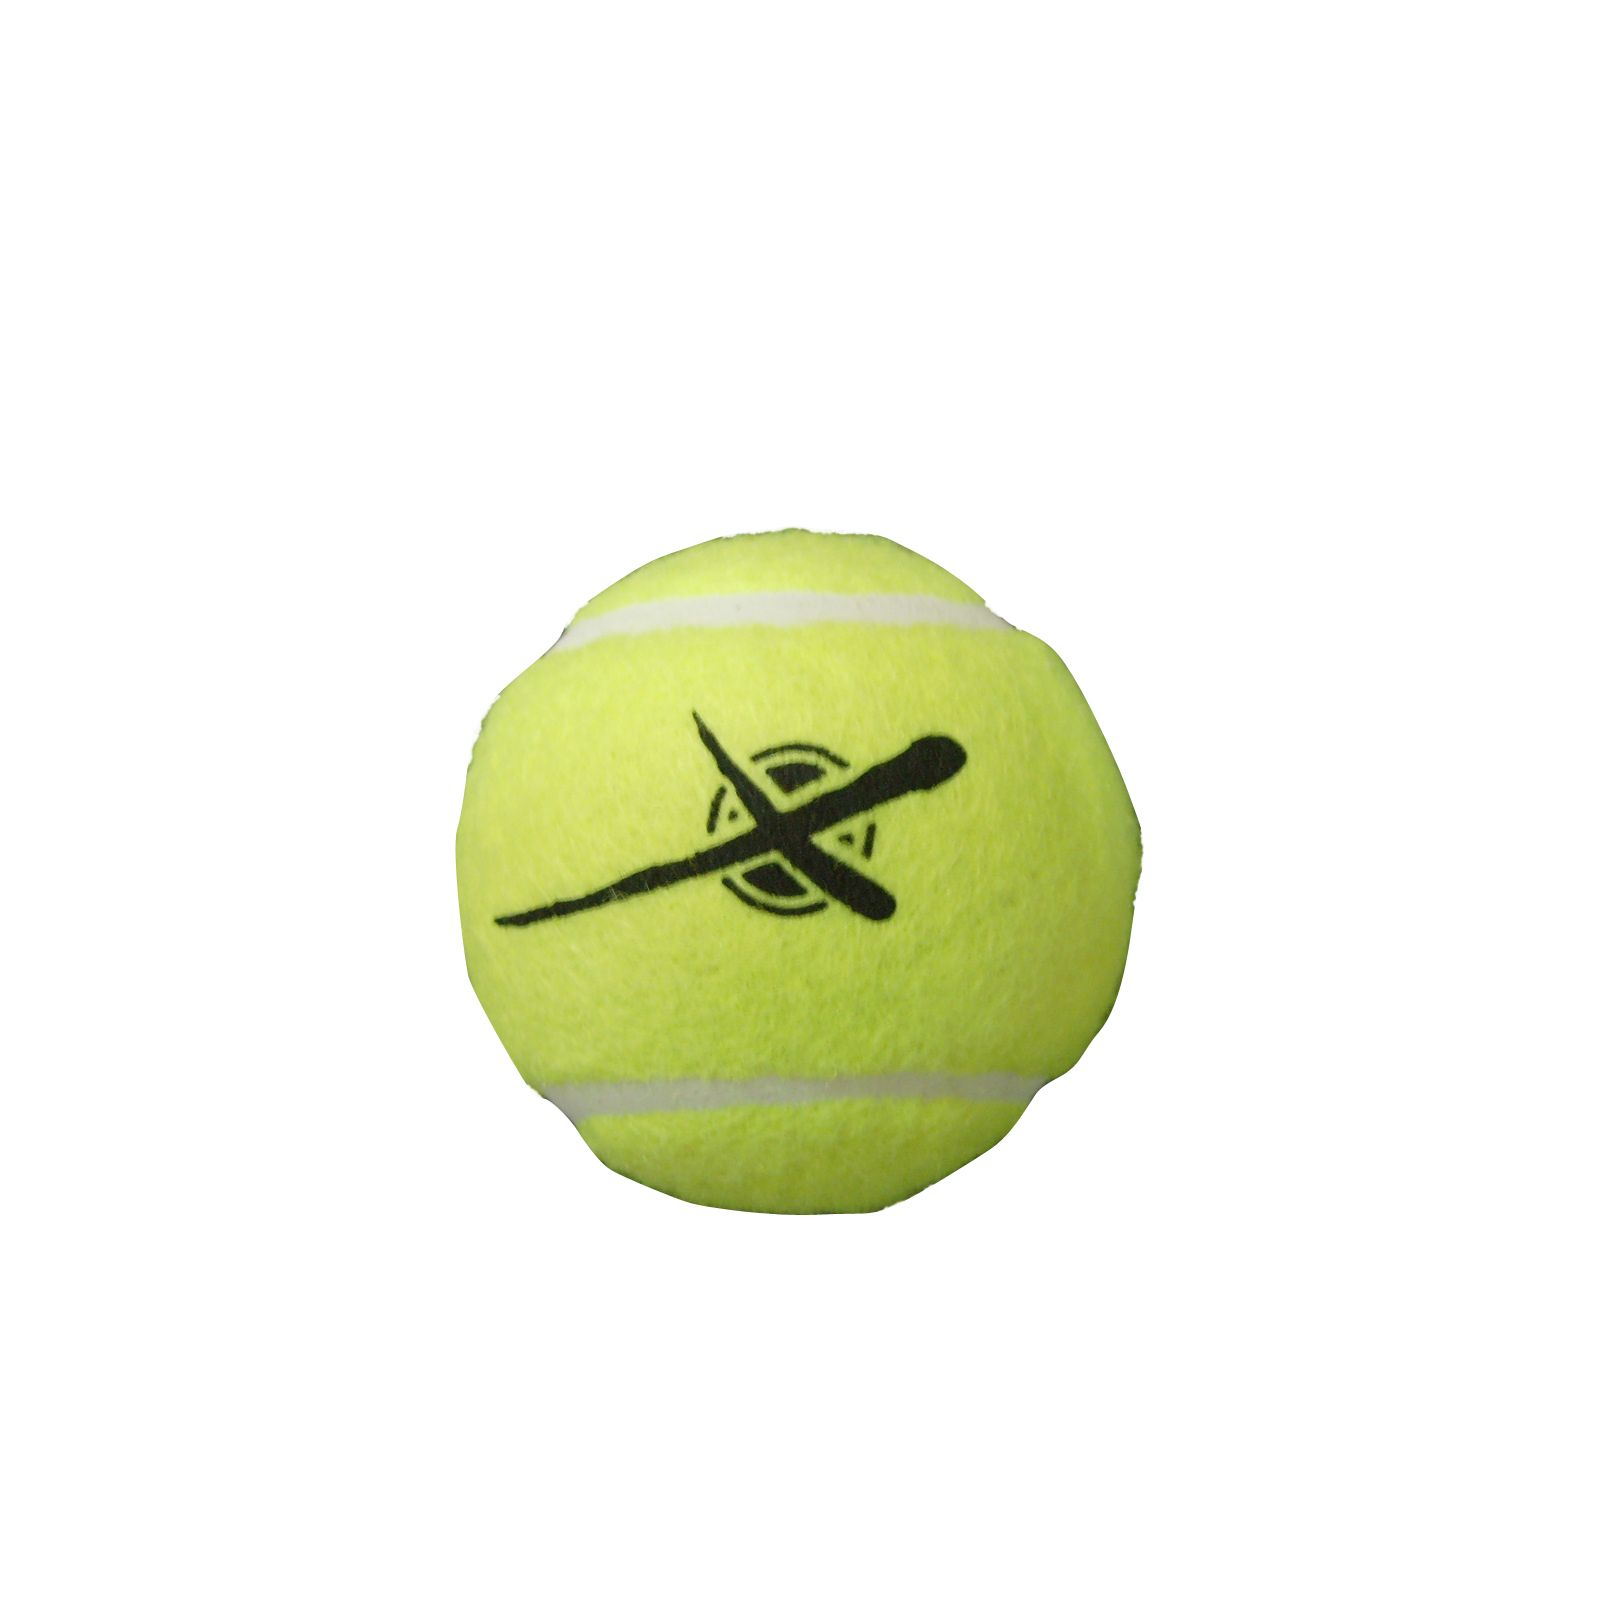 Xtreme Sports Tennis Balls - 3 pack